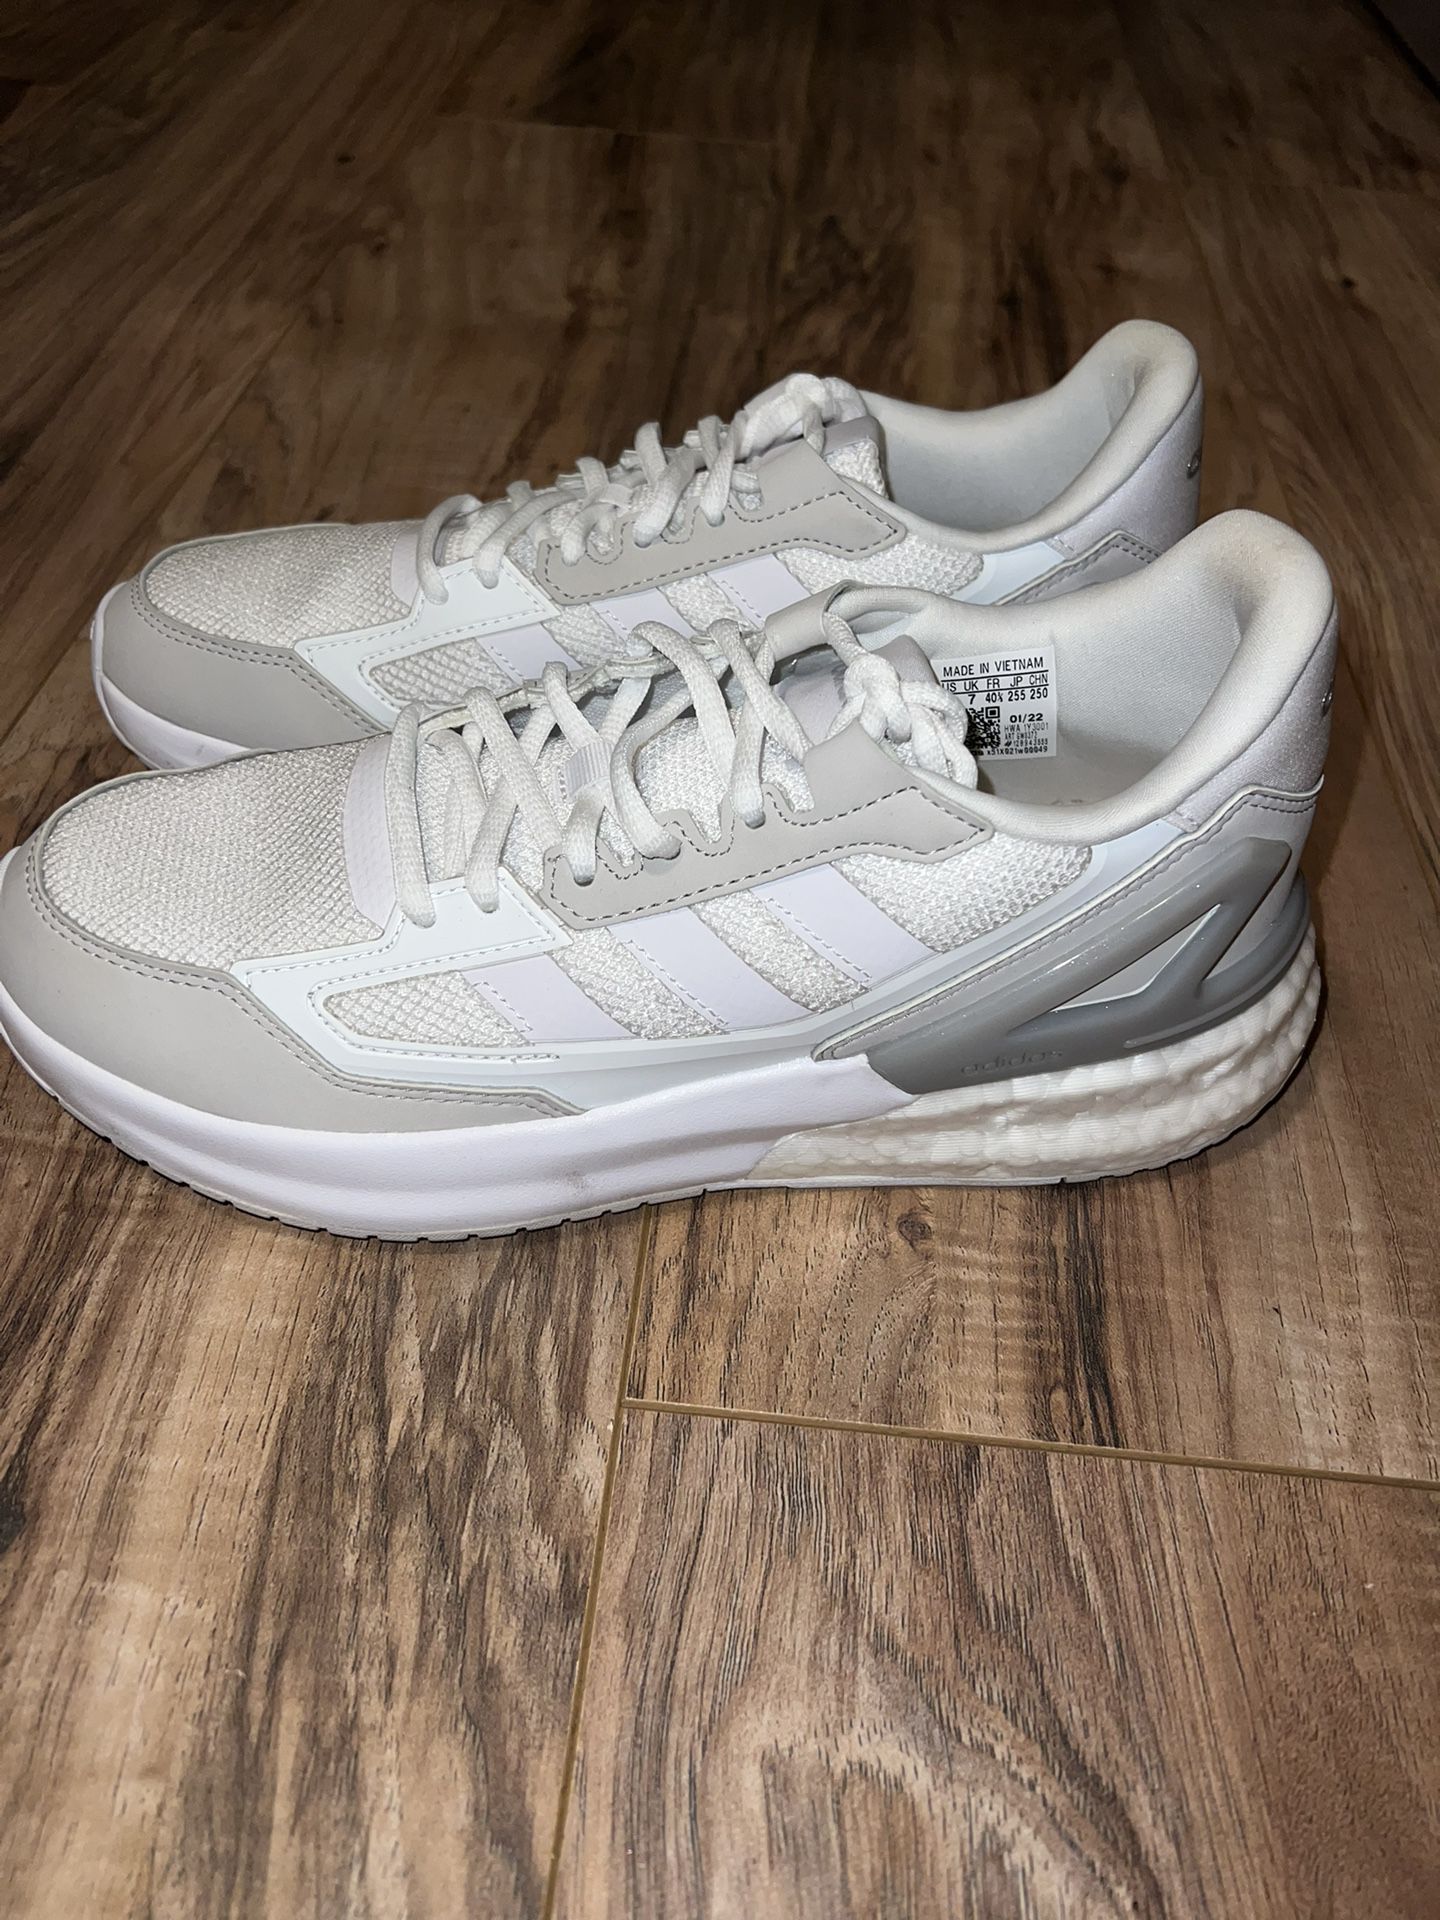 Adidas Women’s Tennis Shoes 